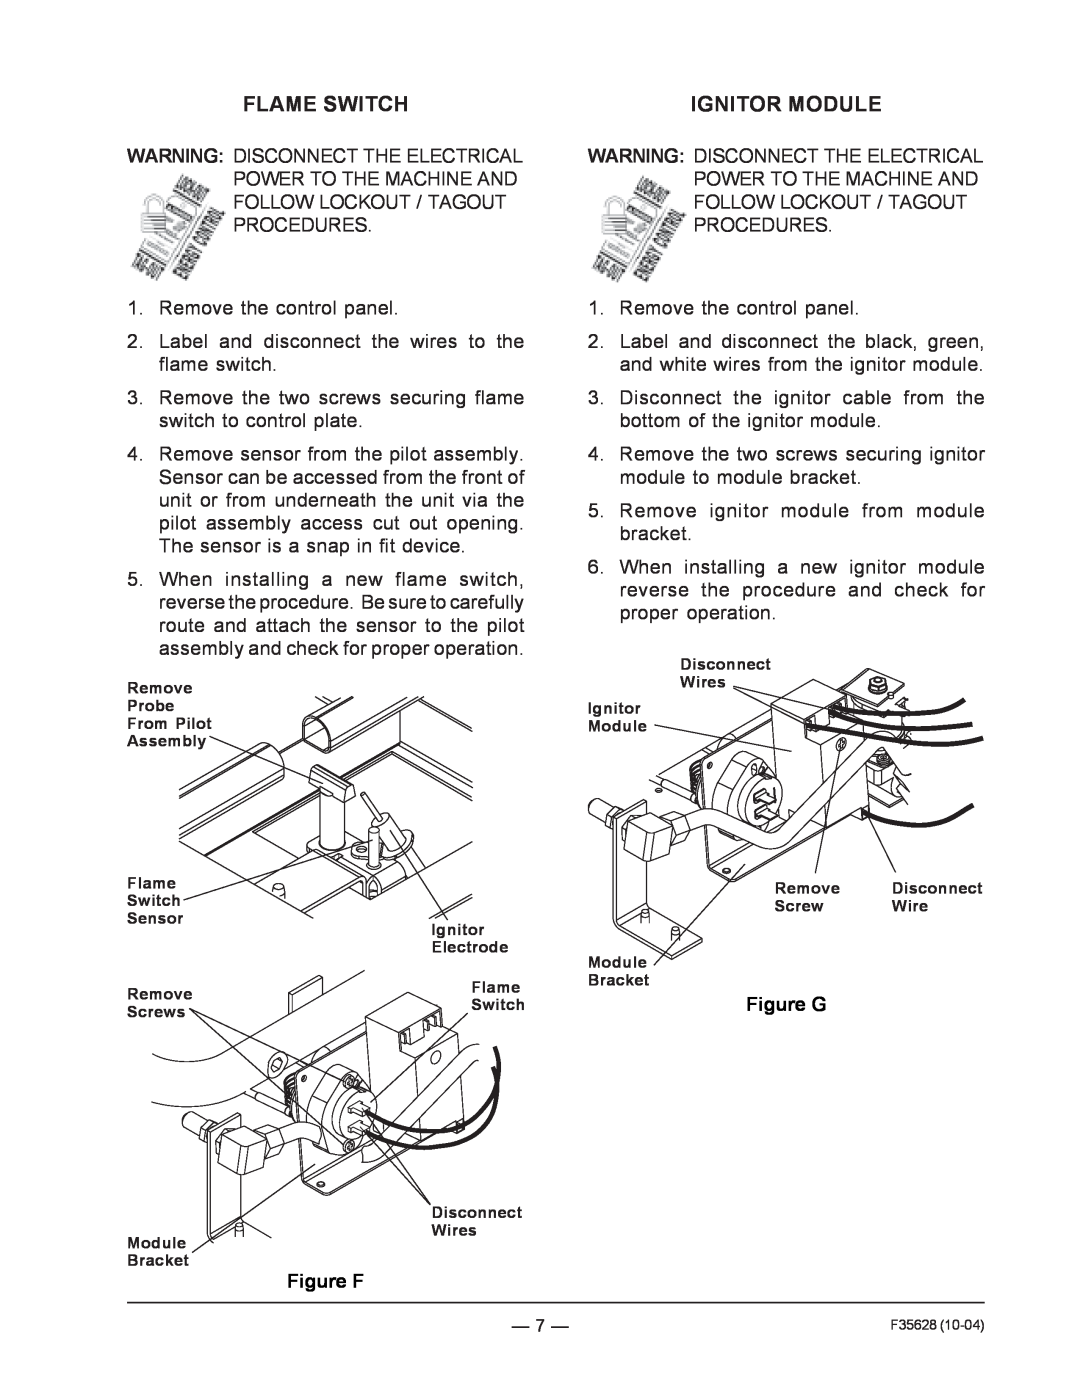 Vulcan-Hart service manual Flame Switch, Ignitor Module, Figure G, Figure F 